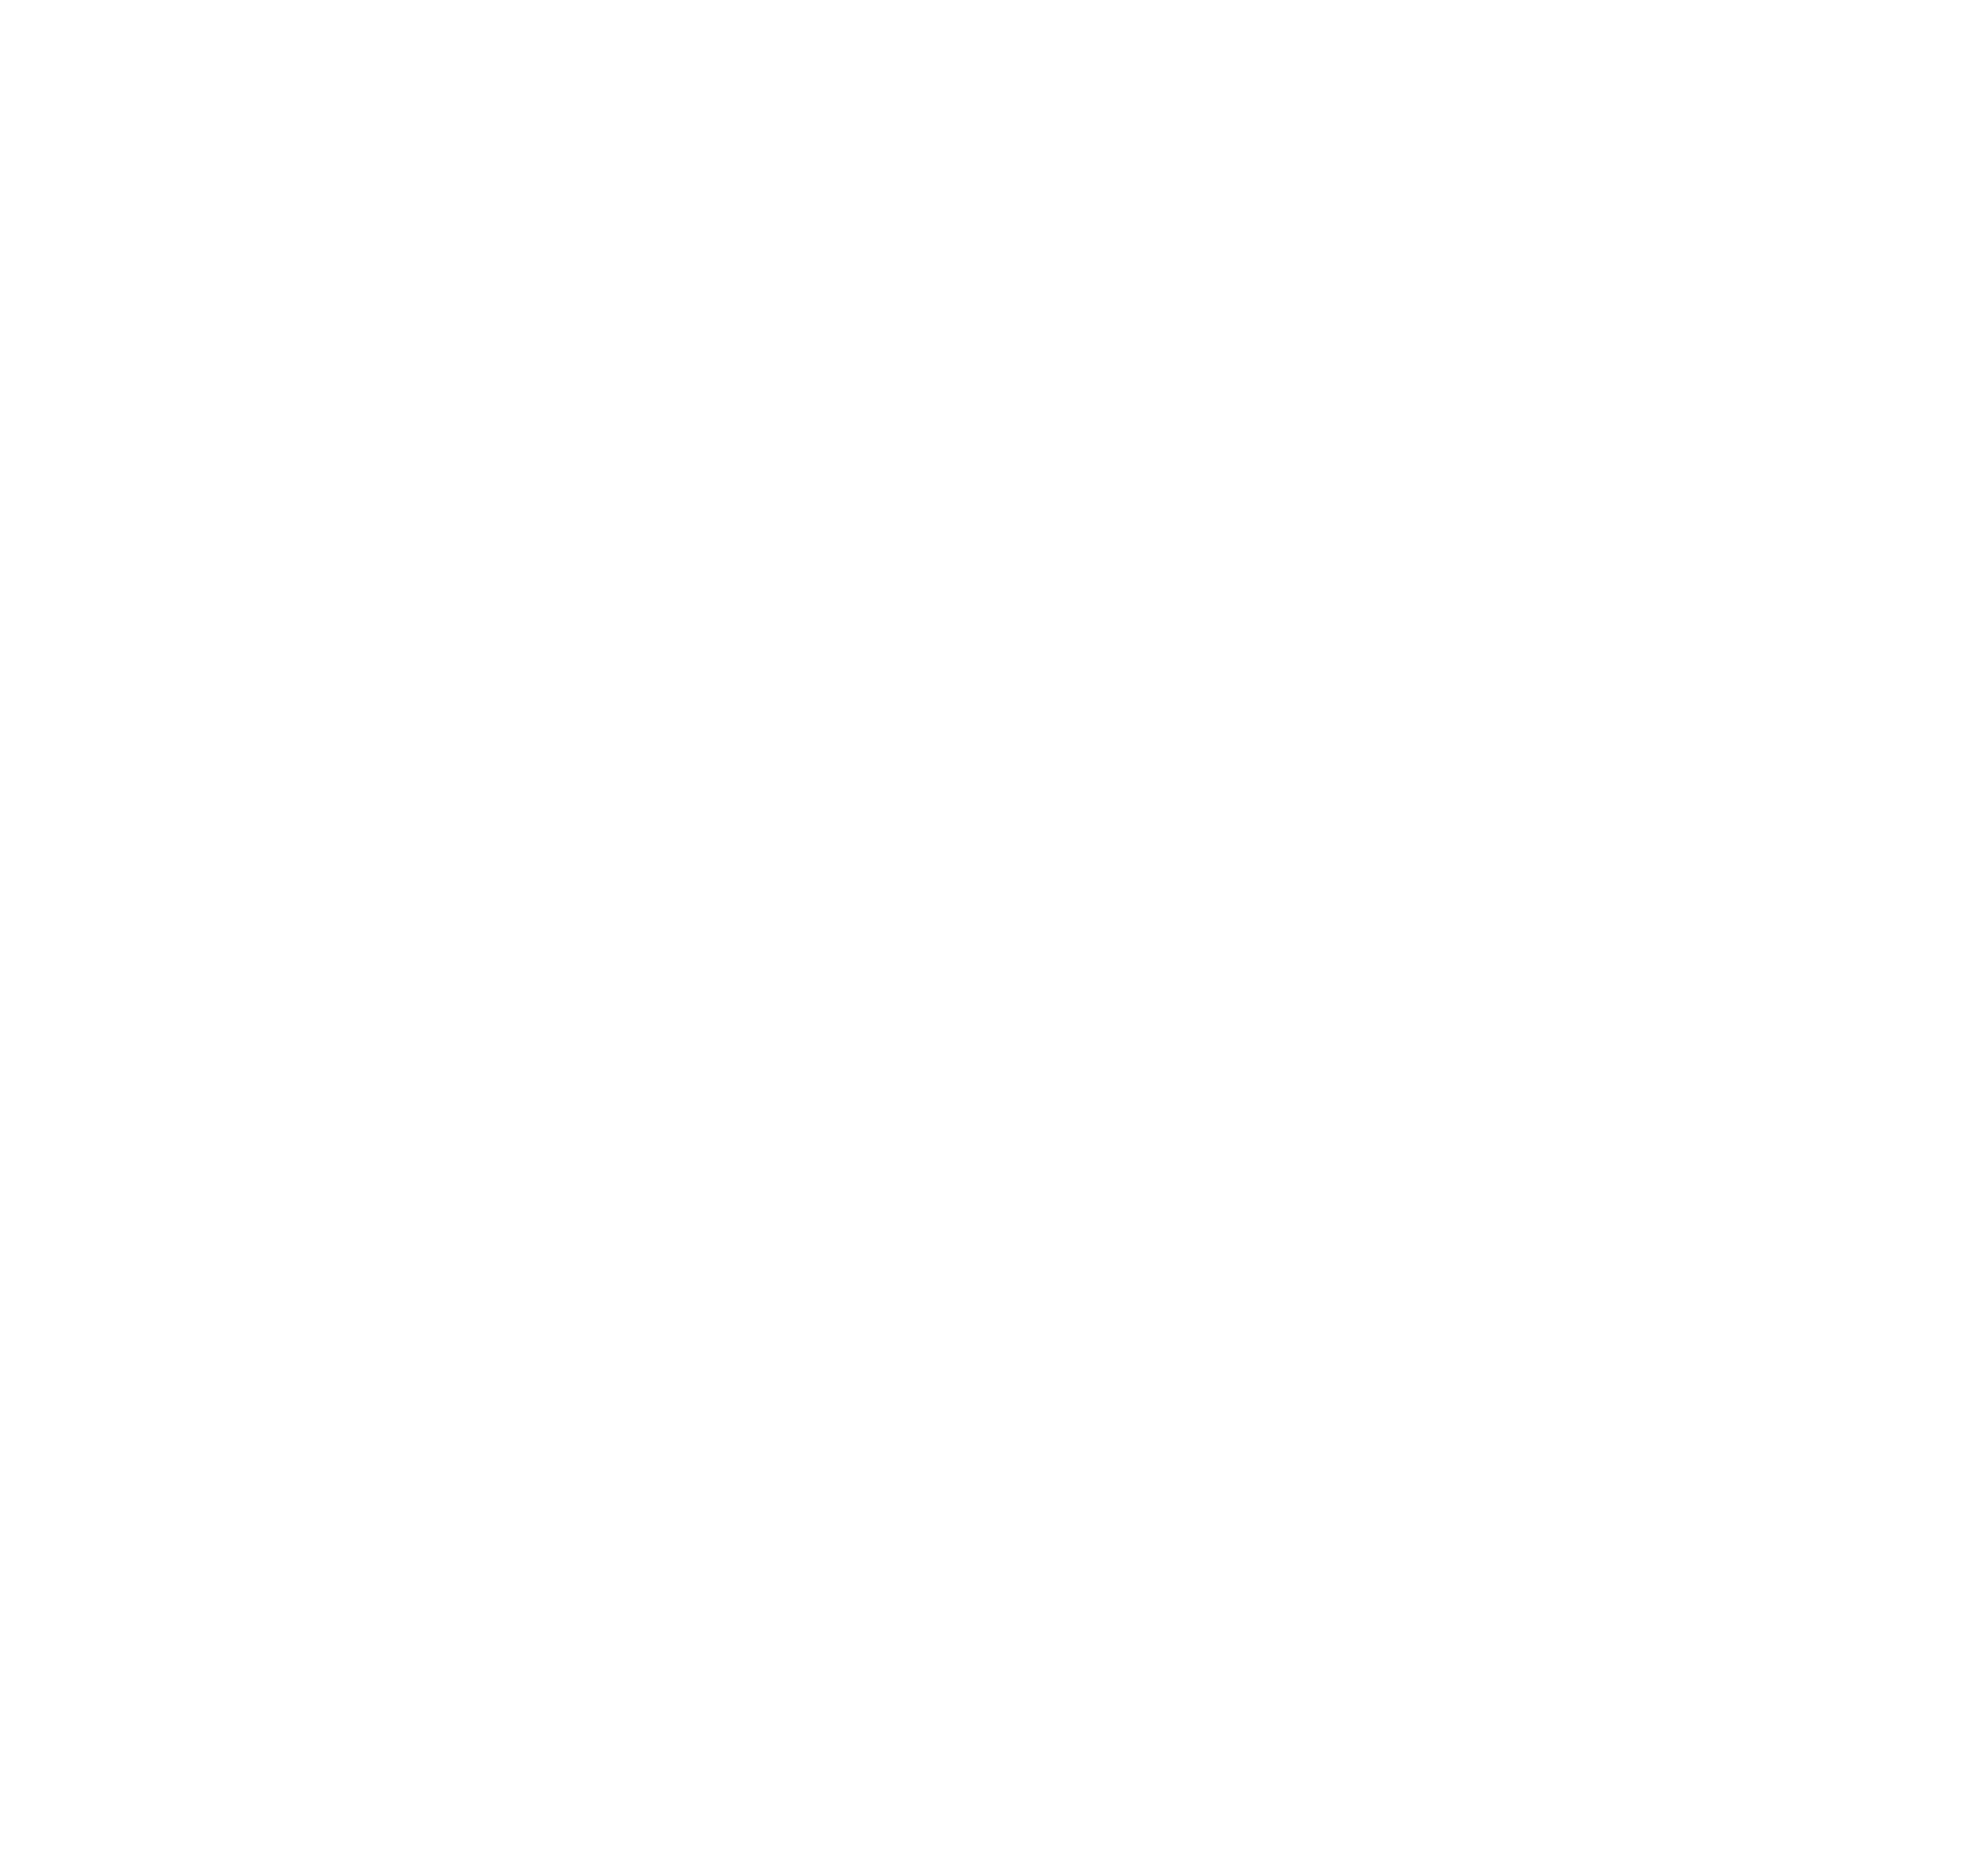 Beebe Law